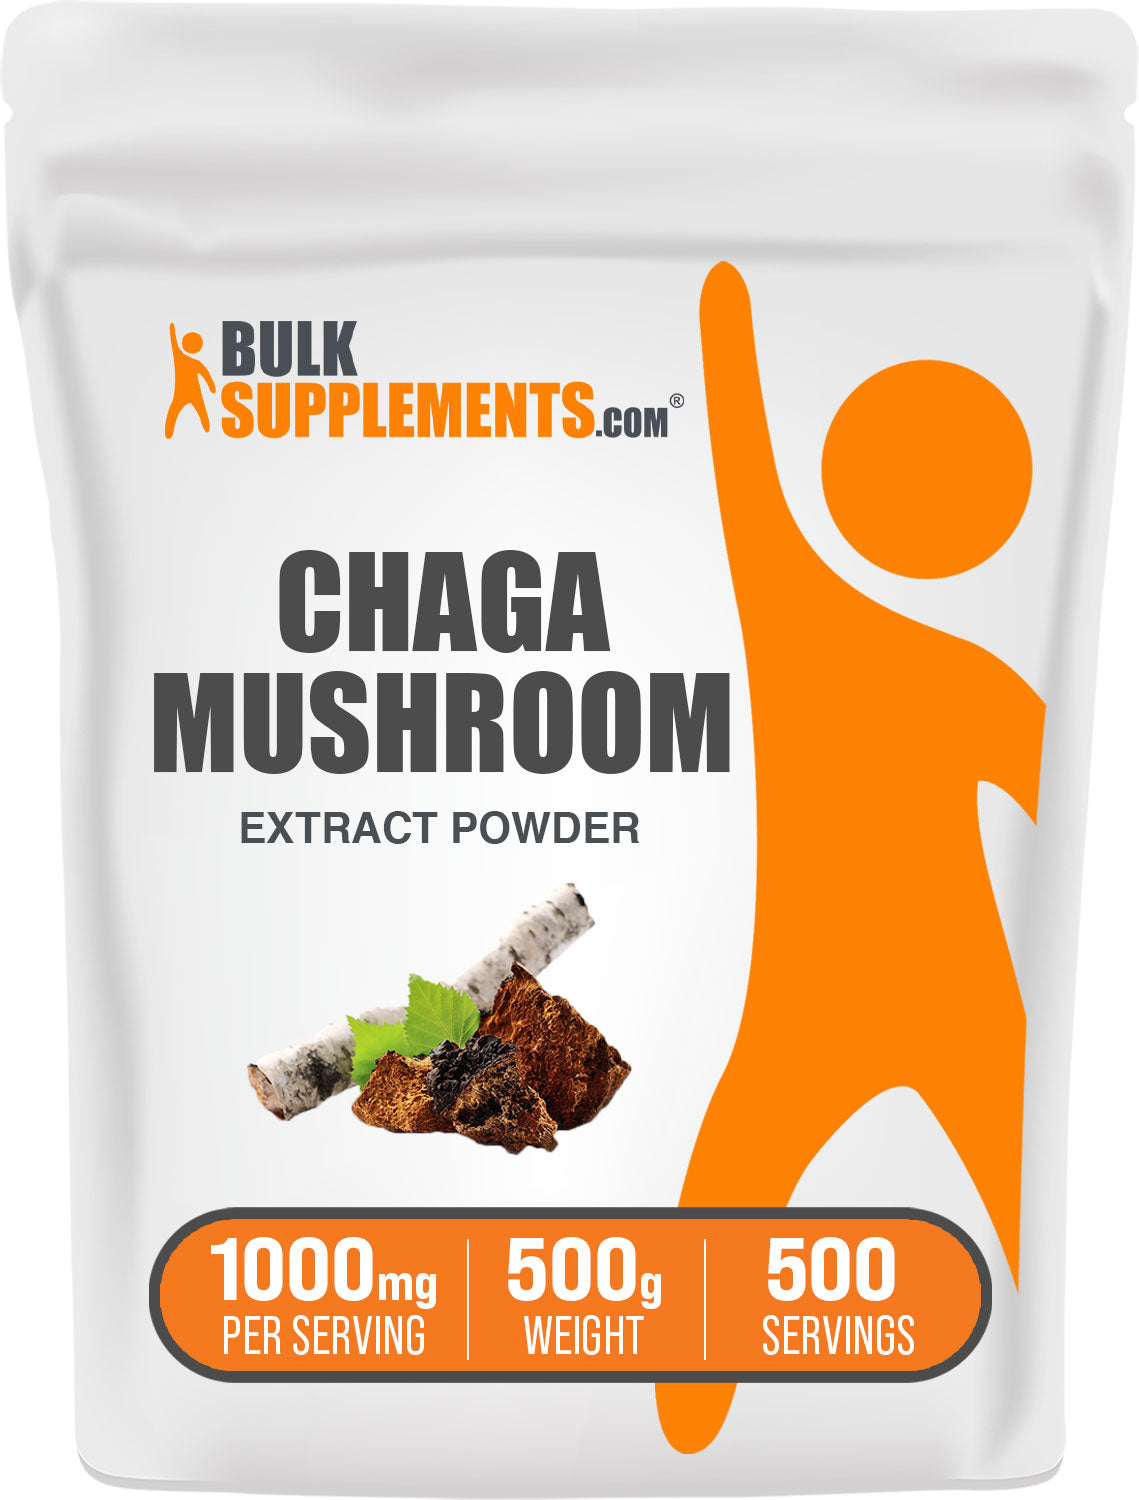 500g of chaga mushroom supplement